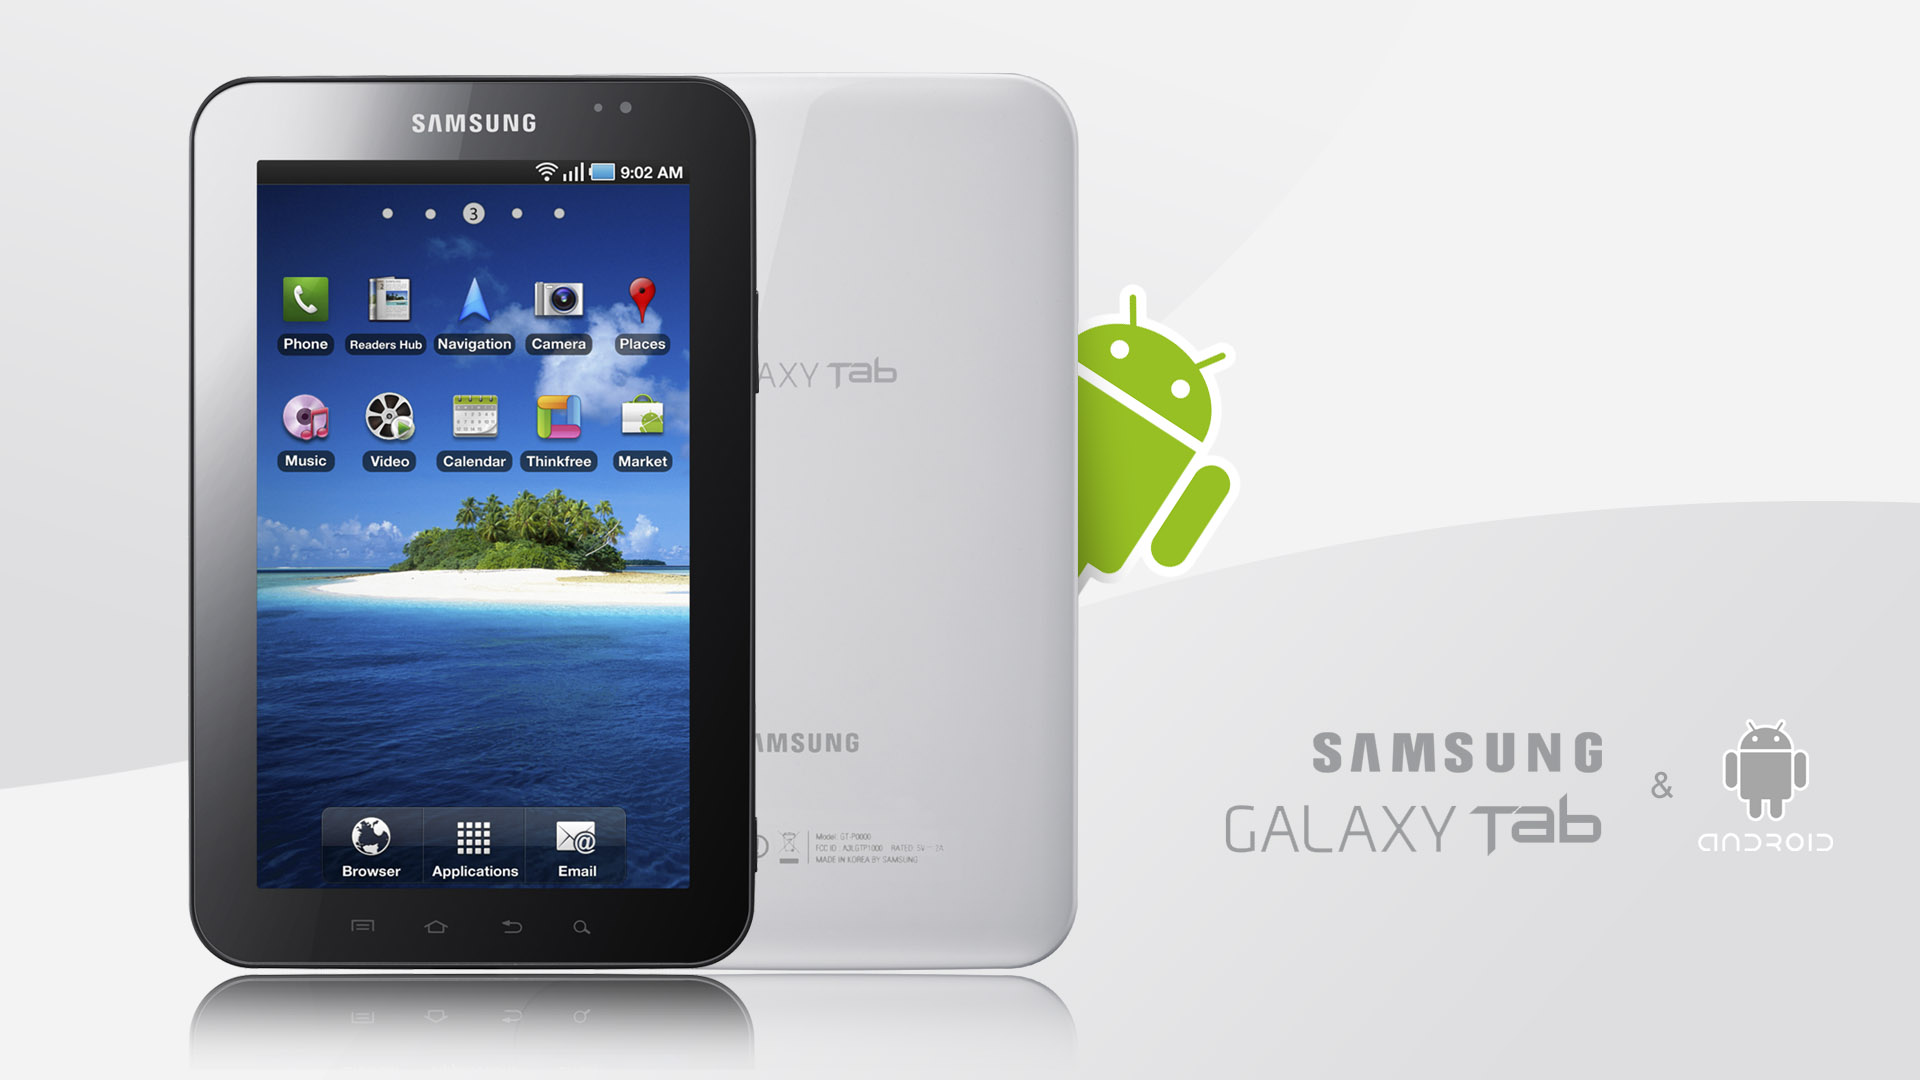 Samsung Galaxy Tab Android 1920x1080 HD Image Gadgets 1920x1080